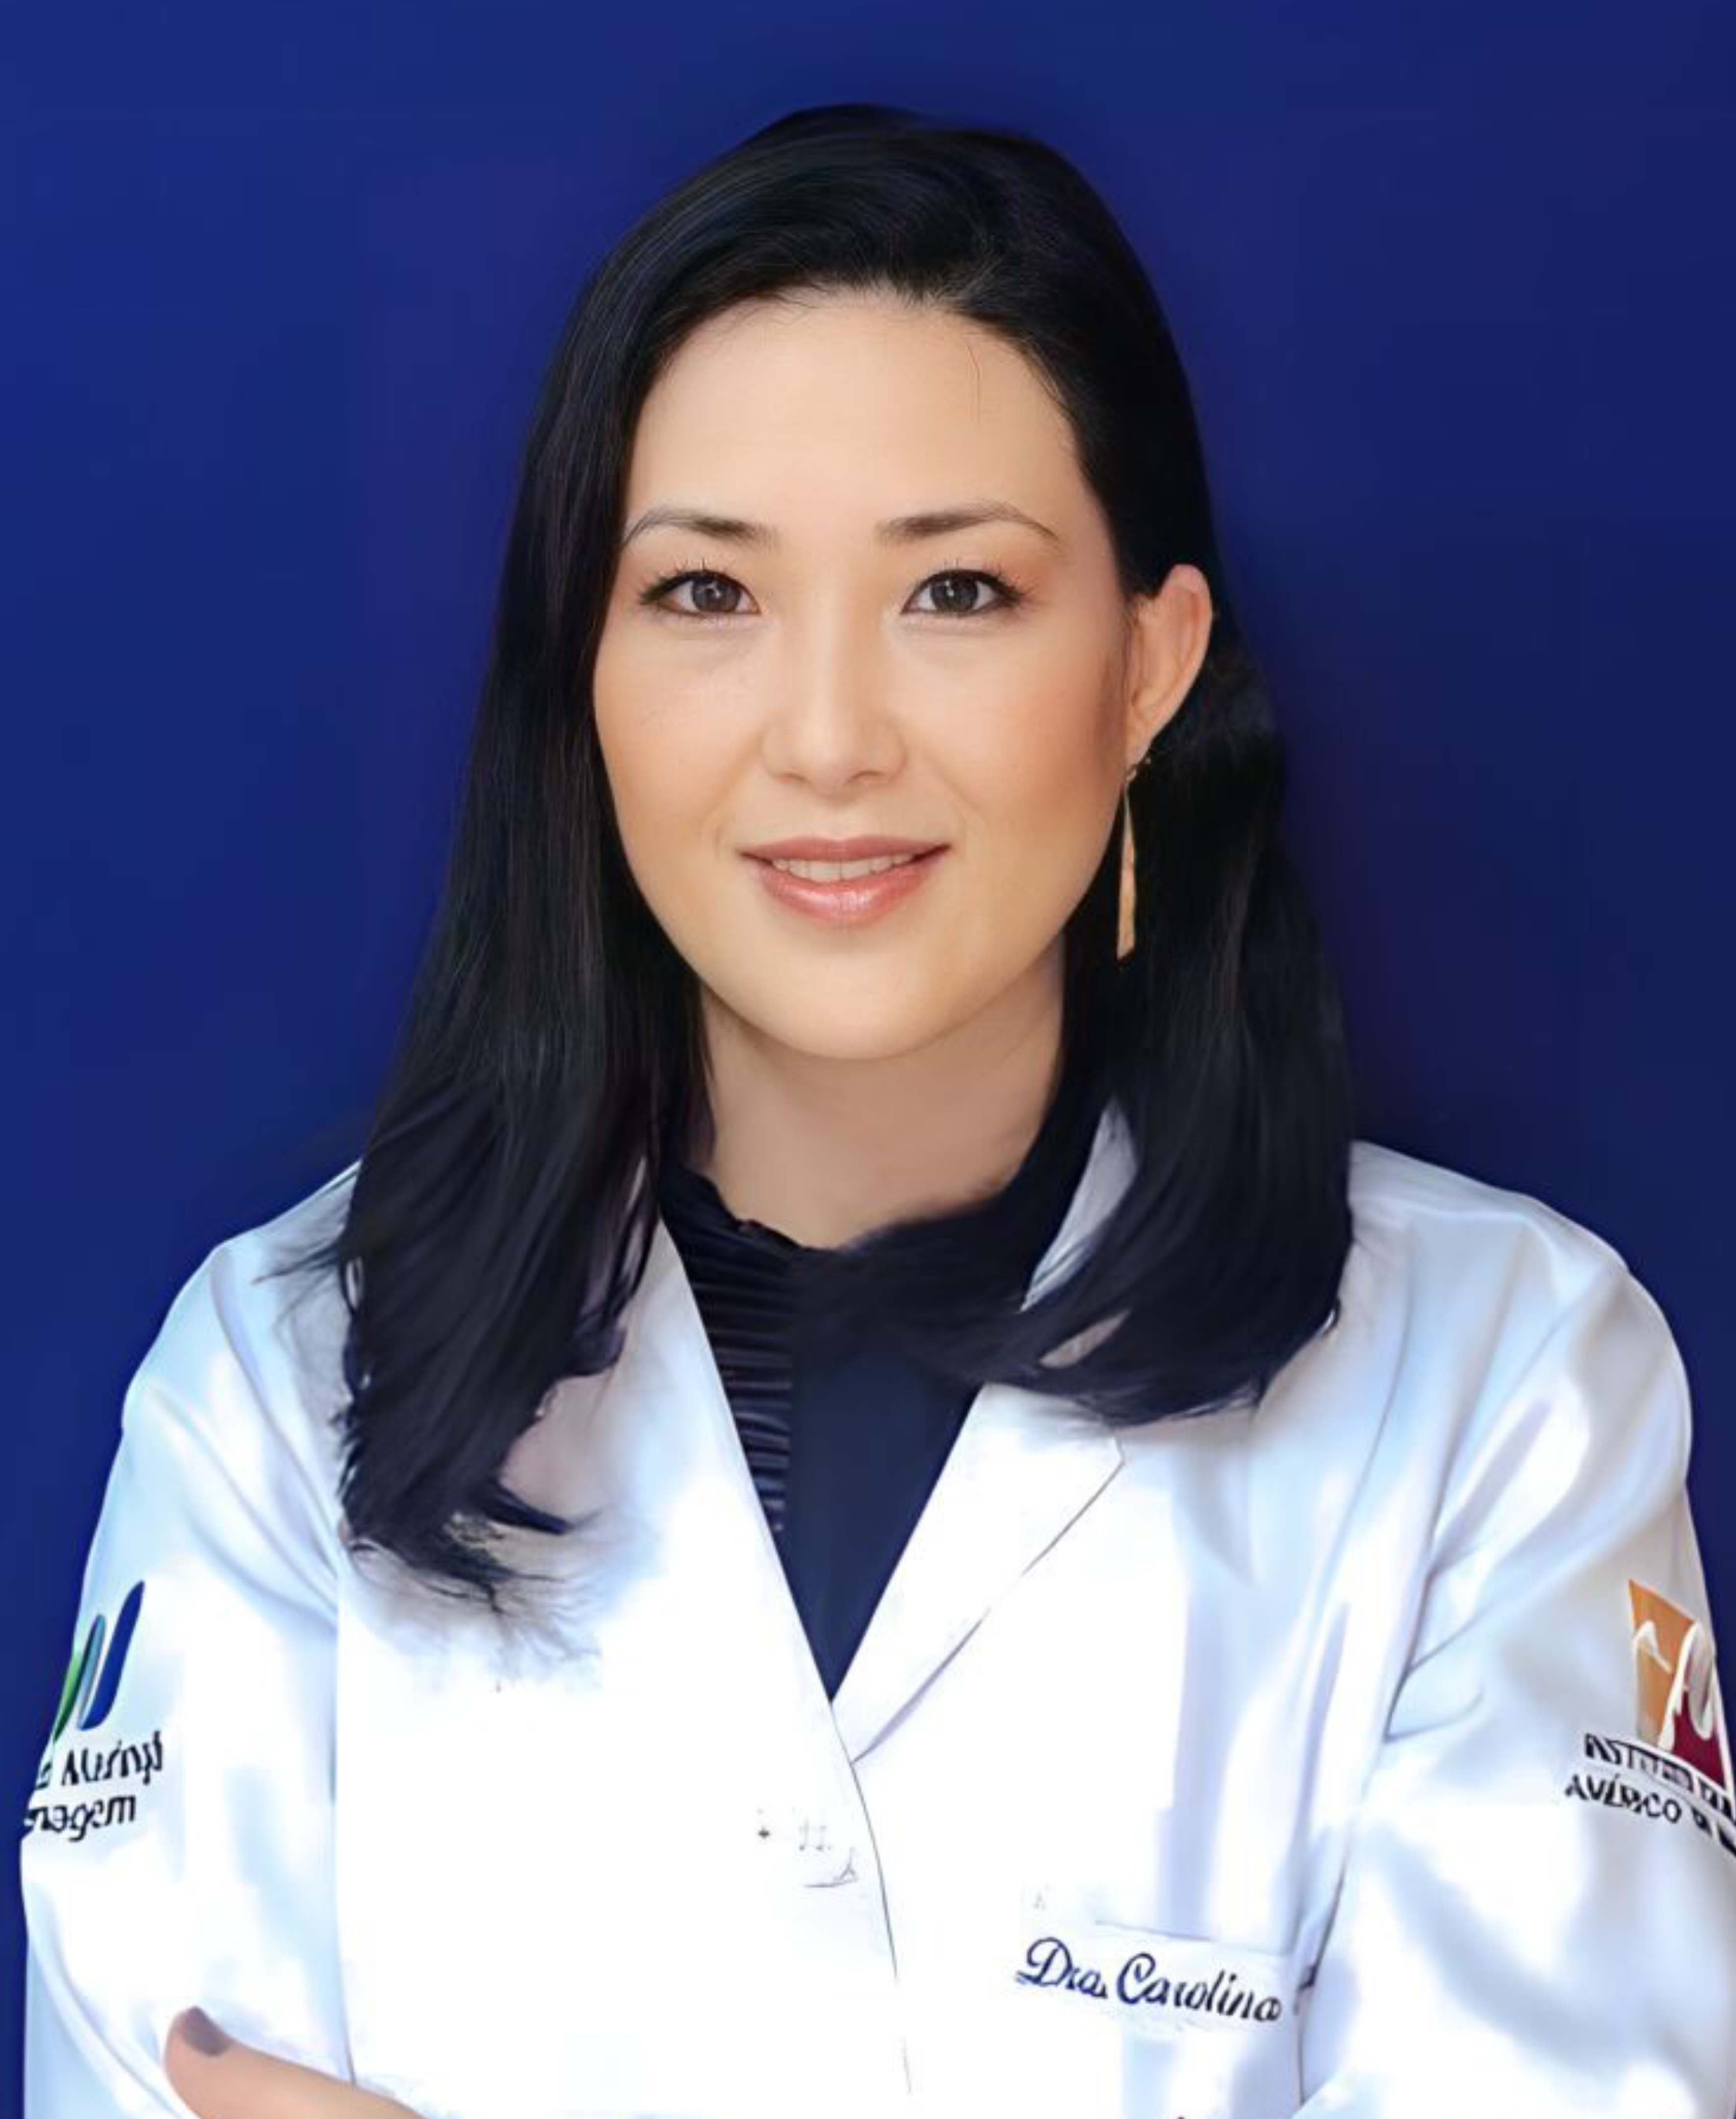 Dra. Carolina Kyrie Otani